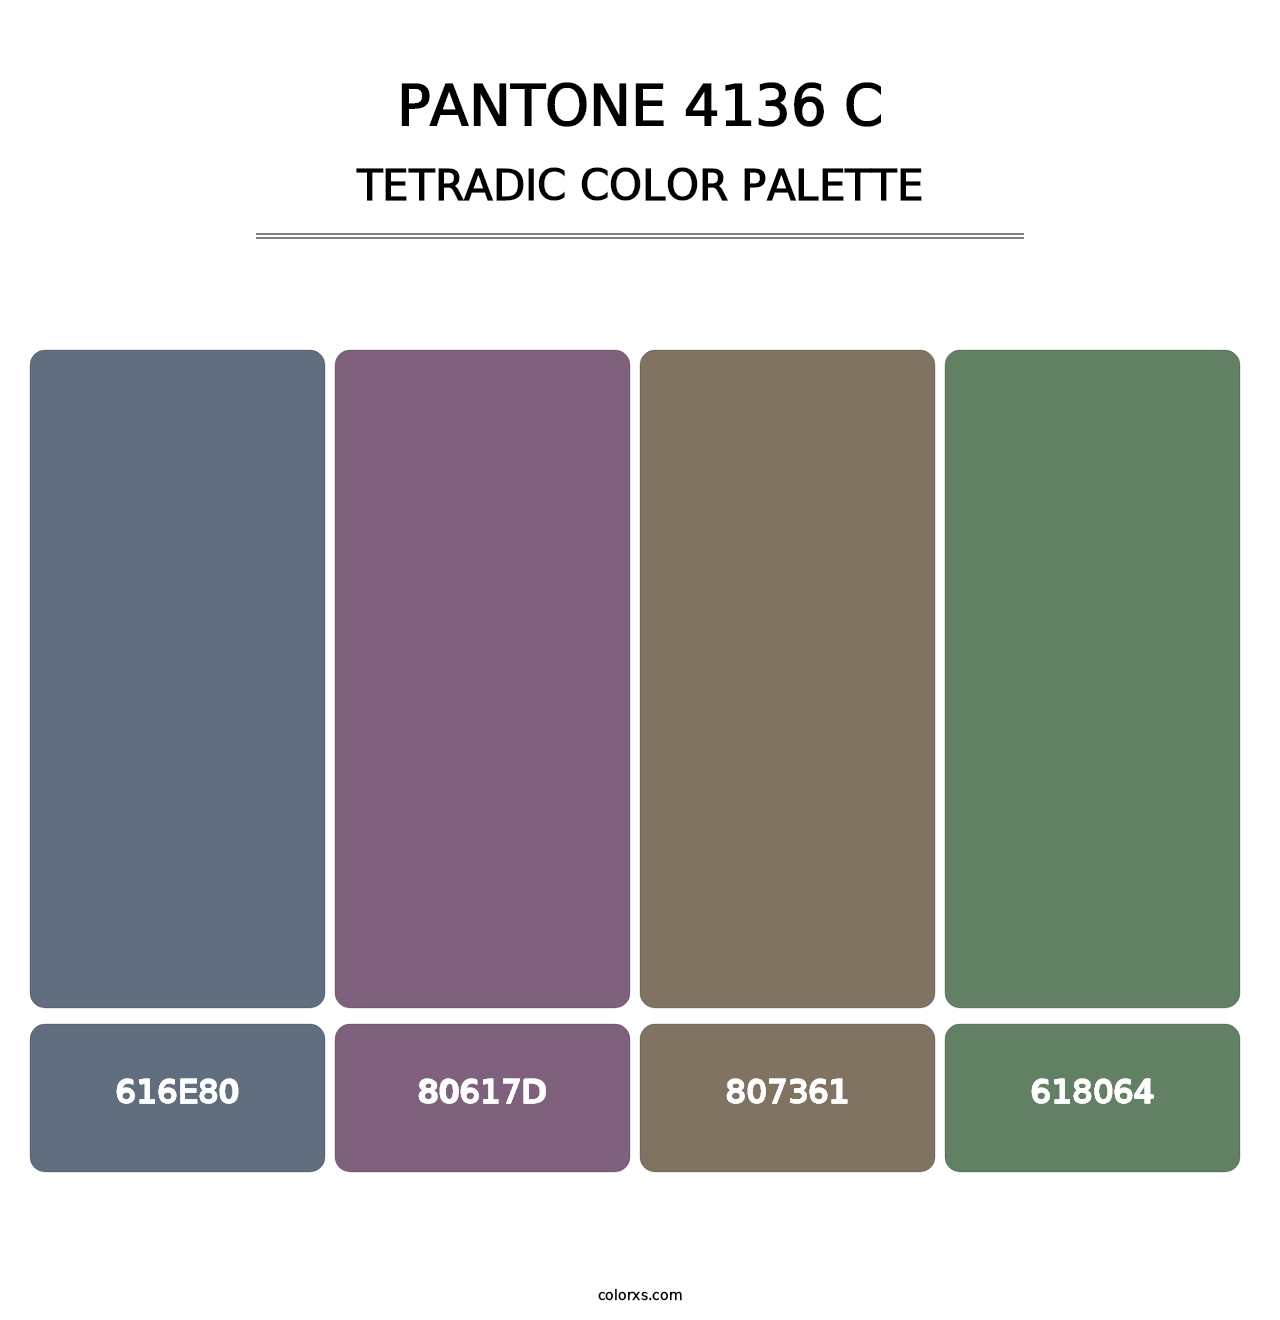 PANTONE 4136 C - Tetradic Color Palette